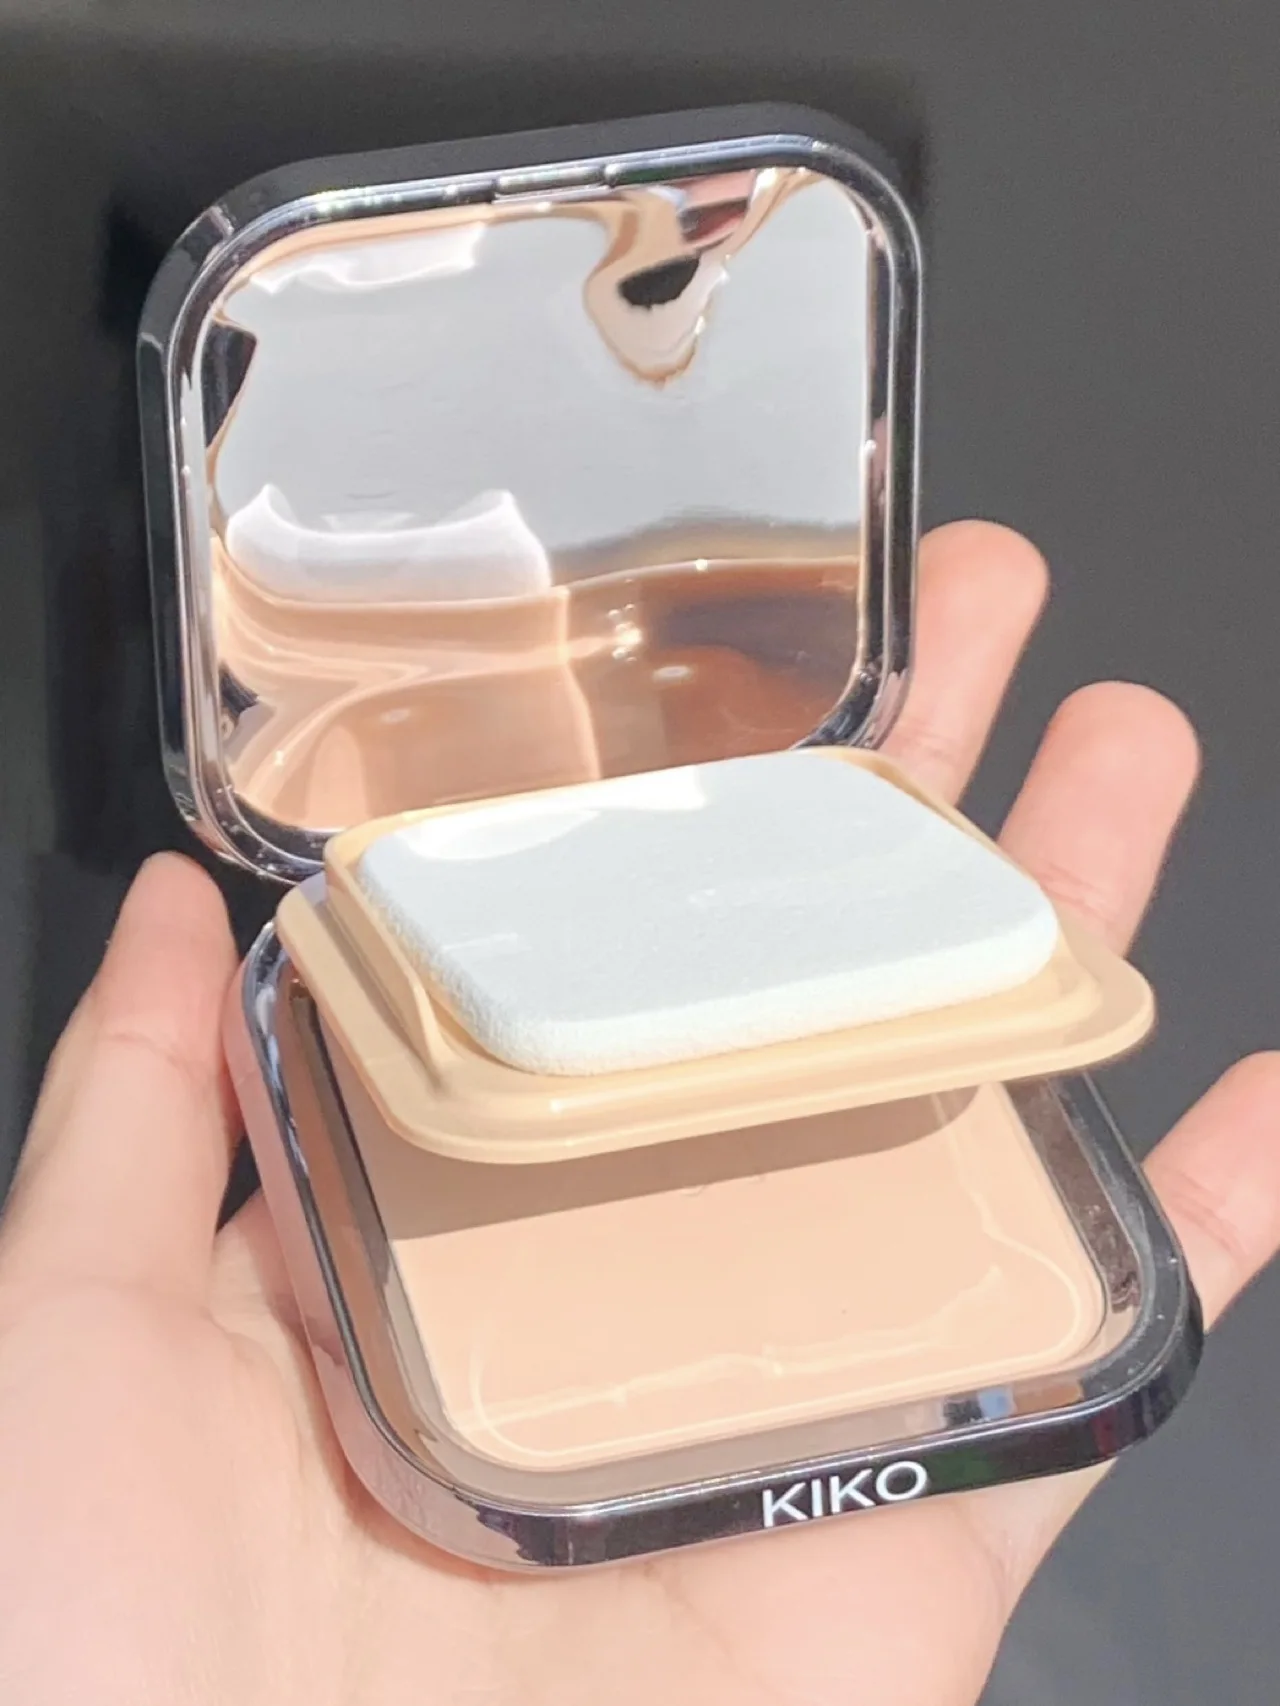 

KIKO make up Soft Honey Powder Cake Light Delicate Concealer Oil Control Invisible Pores Long Lasting Face powder Make up